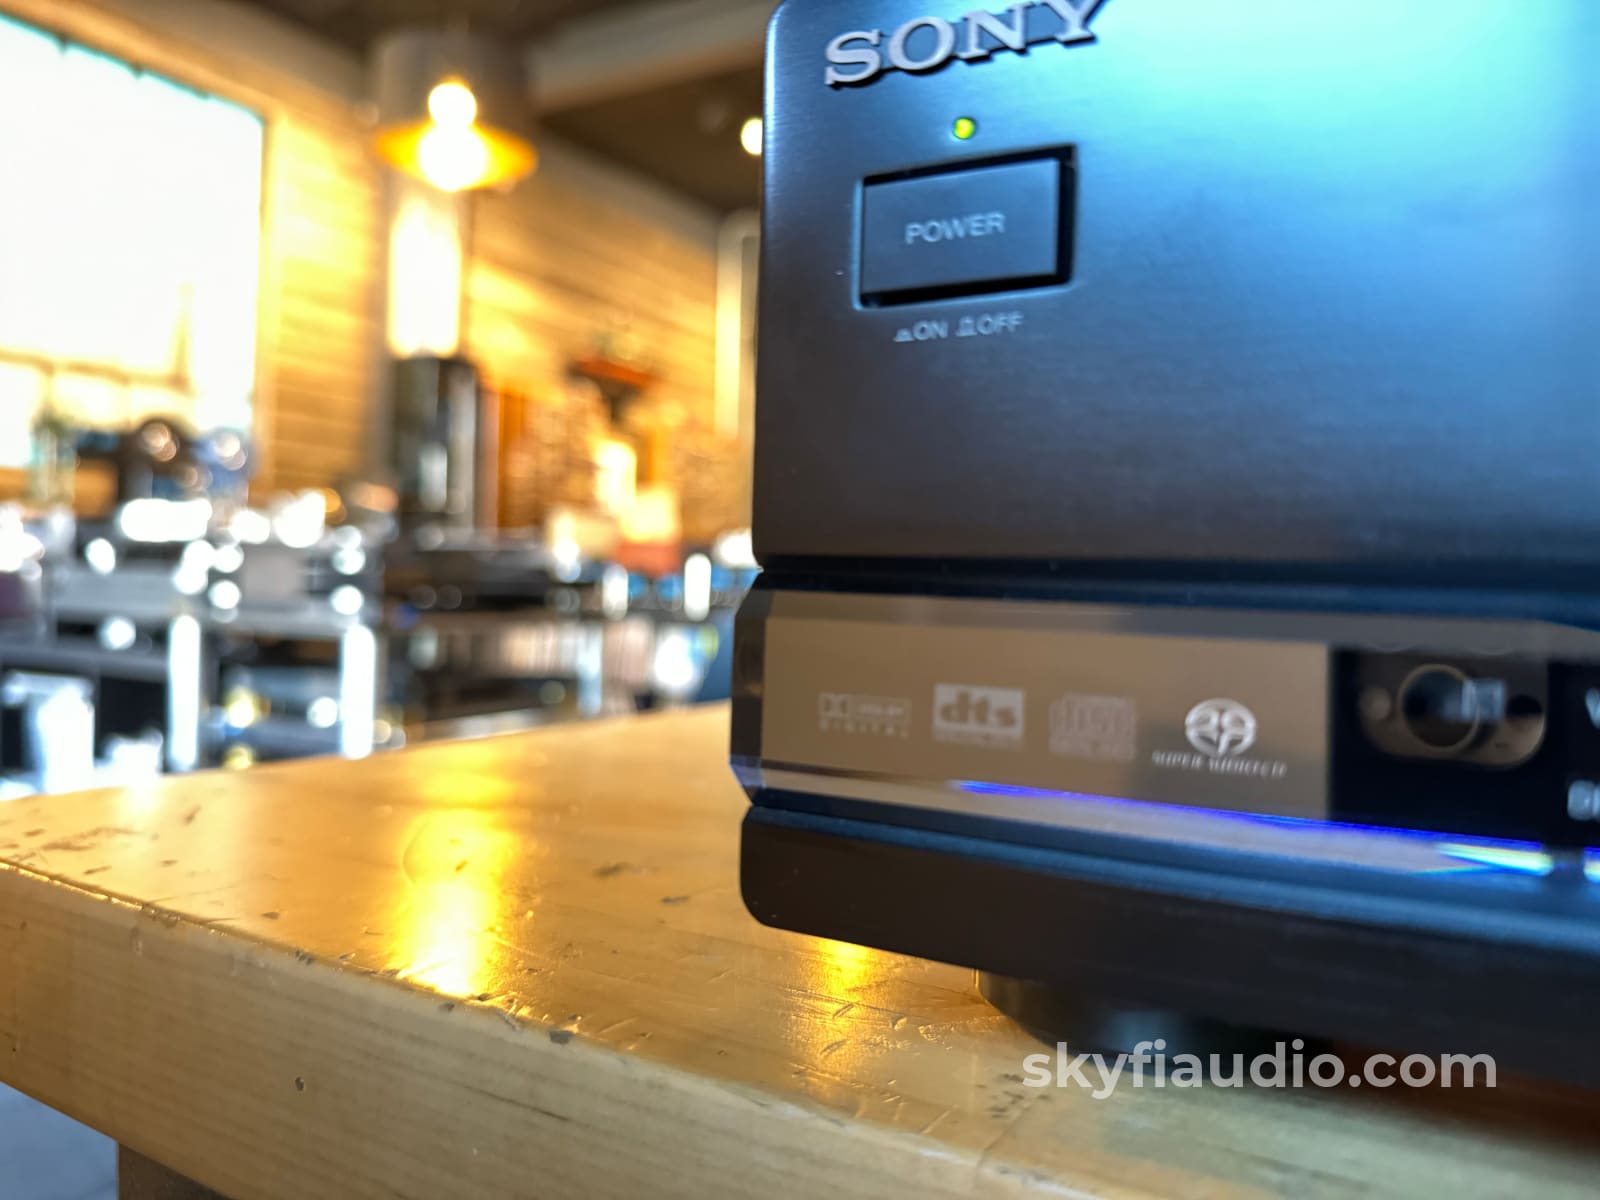 Sony Dvp - S9000Es Reference Dvd/Cd/Sacd Player Cd + Digital